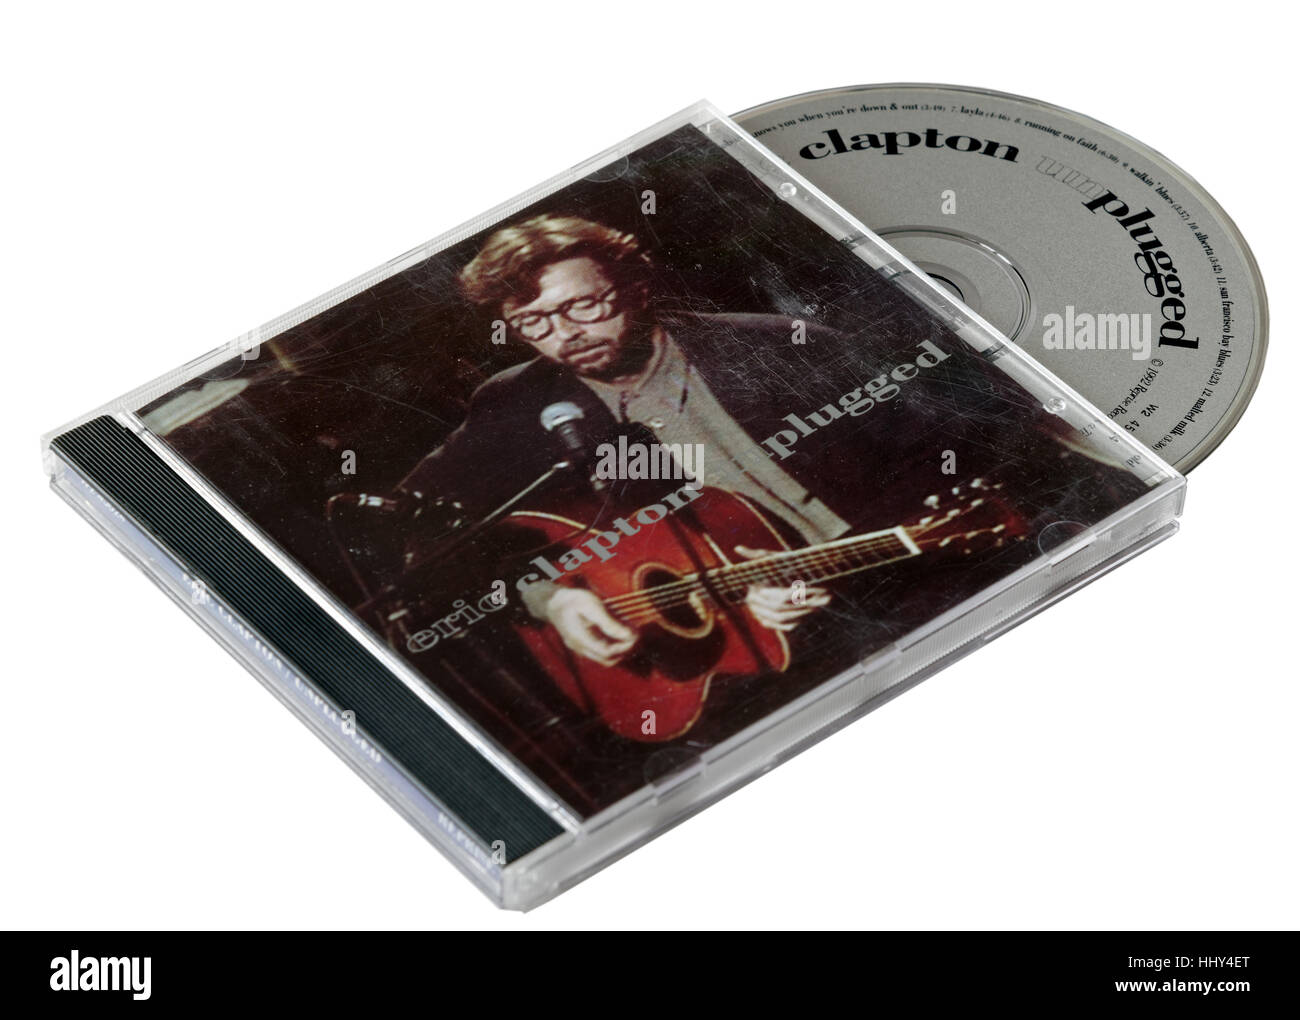 Eric Clapton Unplugged CD Foto stock - Alamy